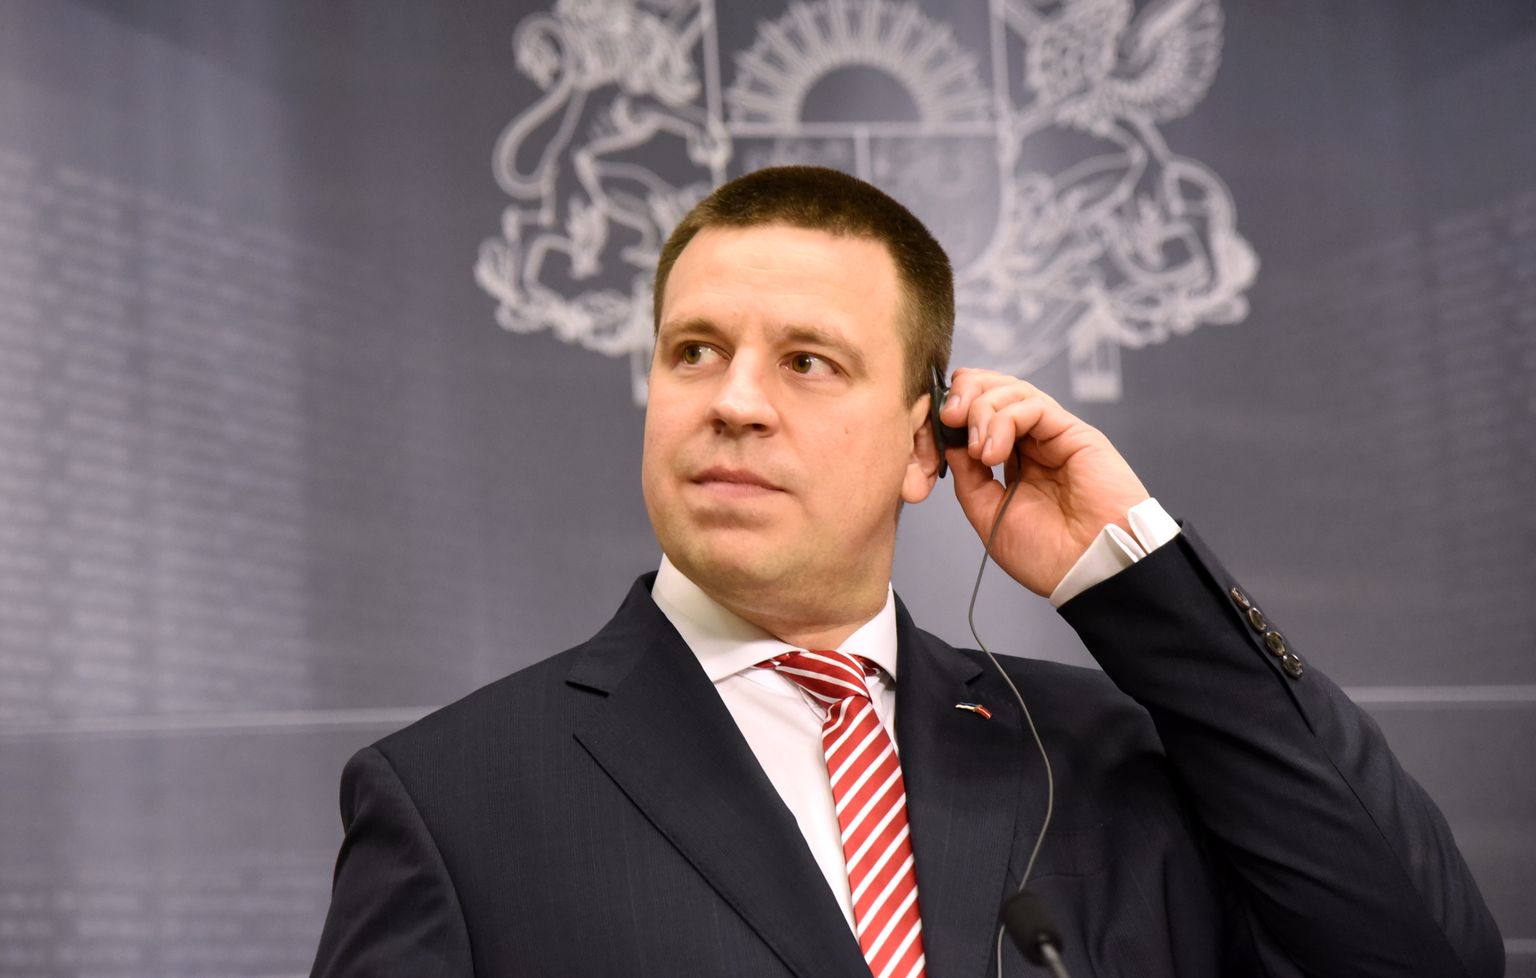 Igaunijas Ministru prezidents Jiri Ratass